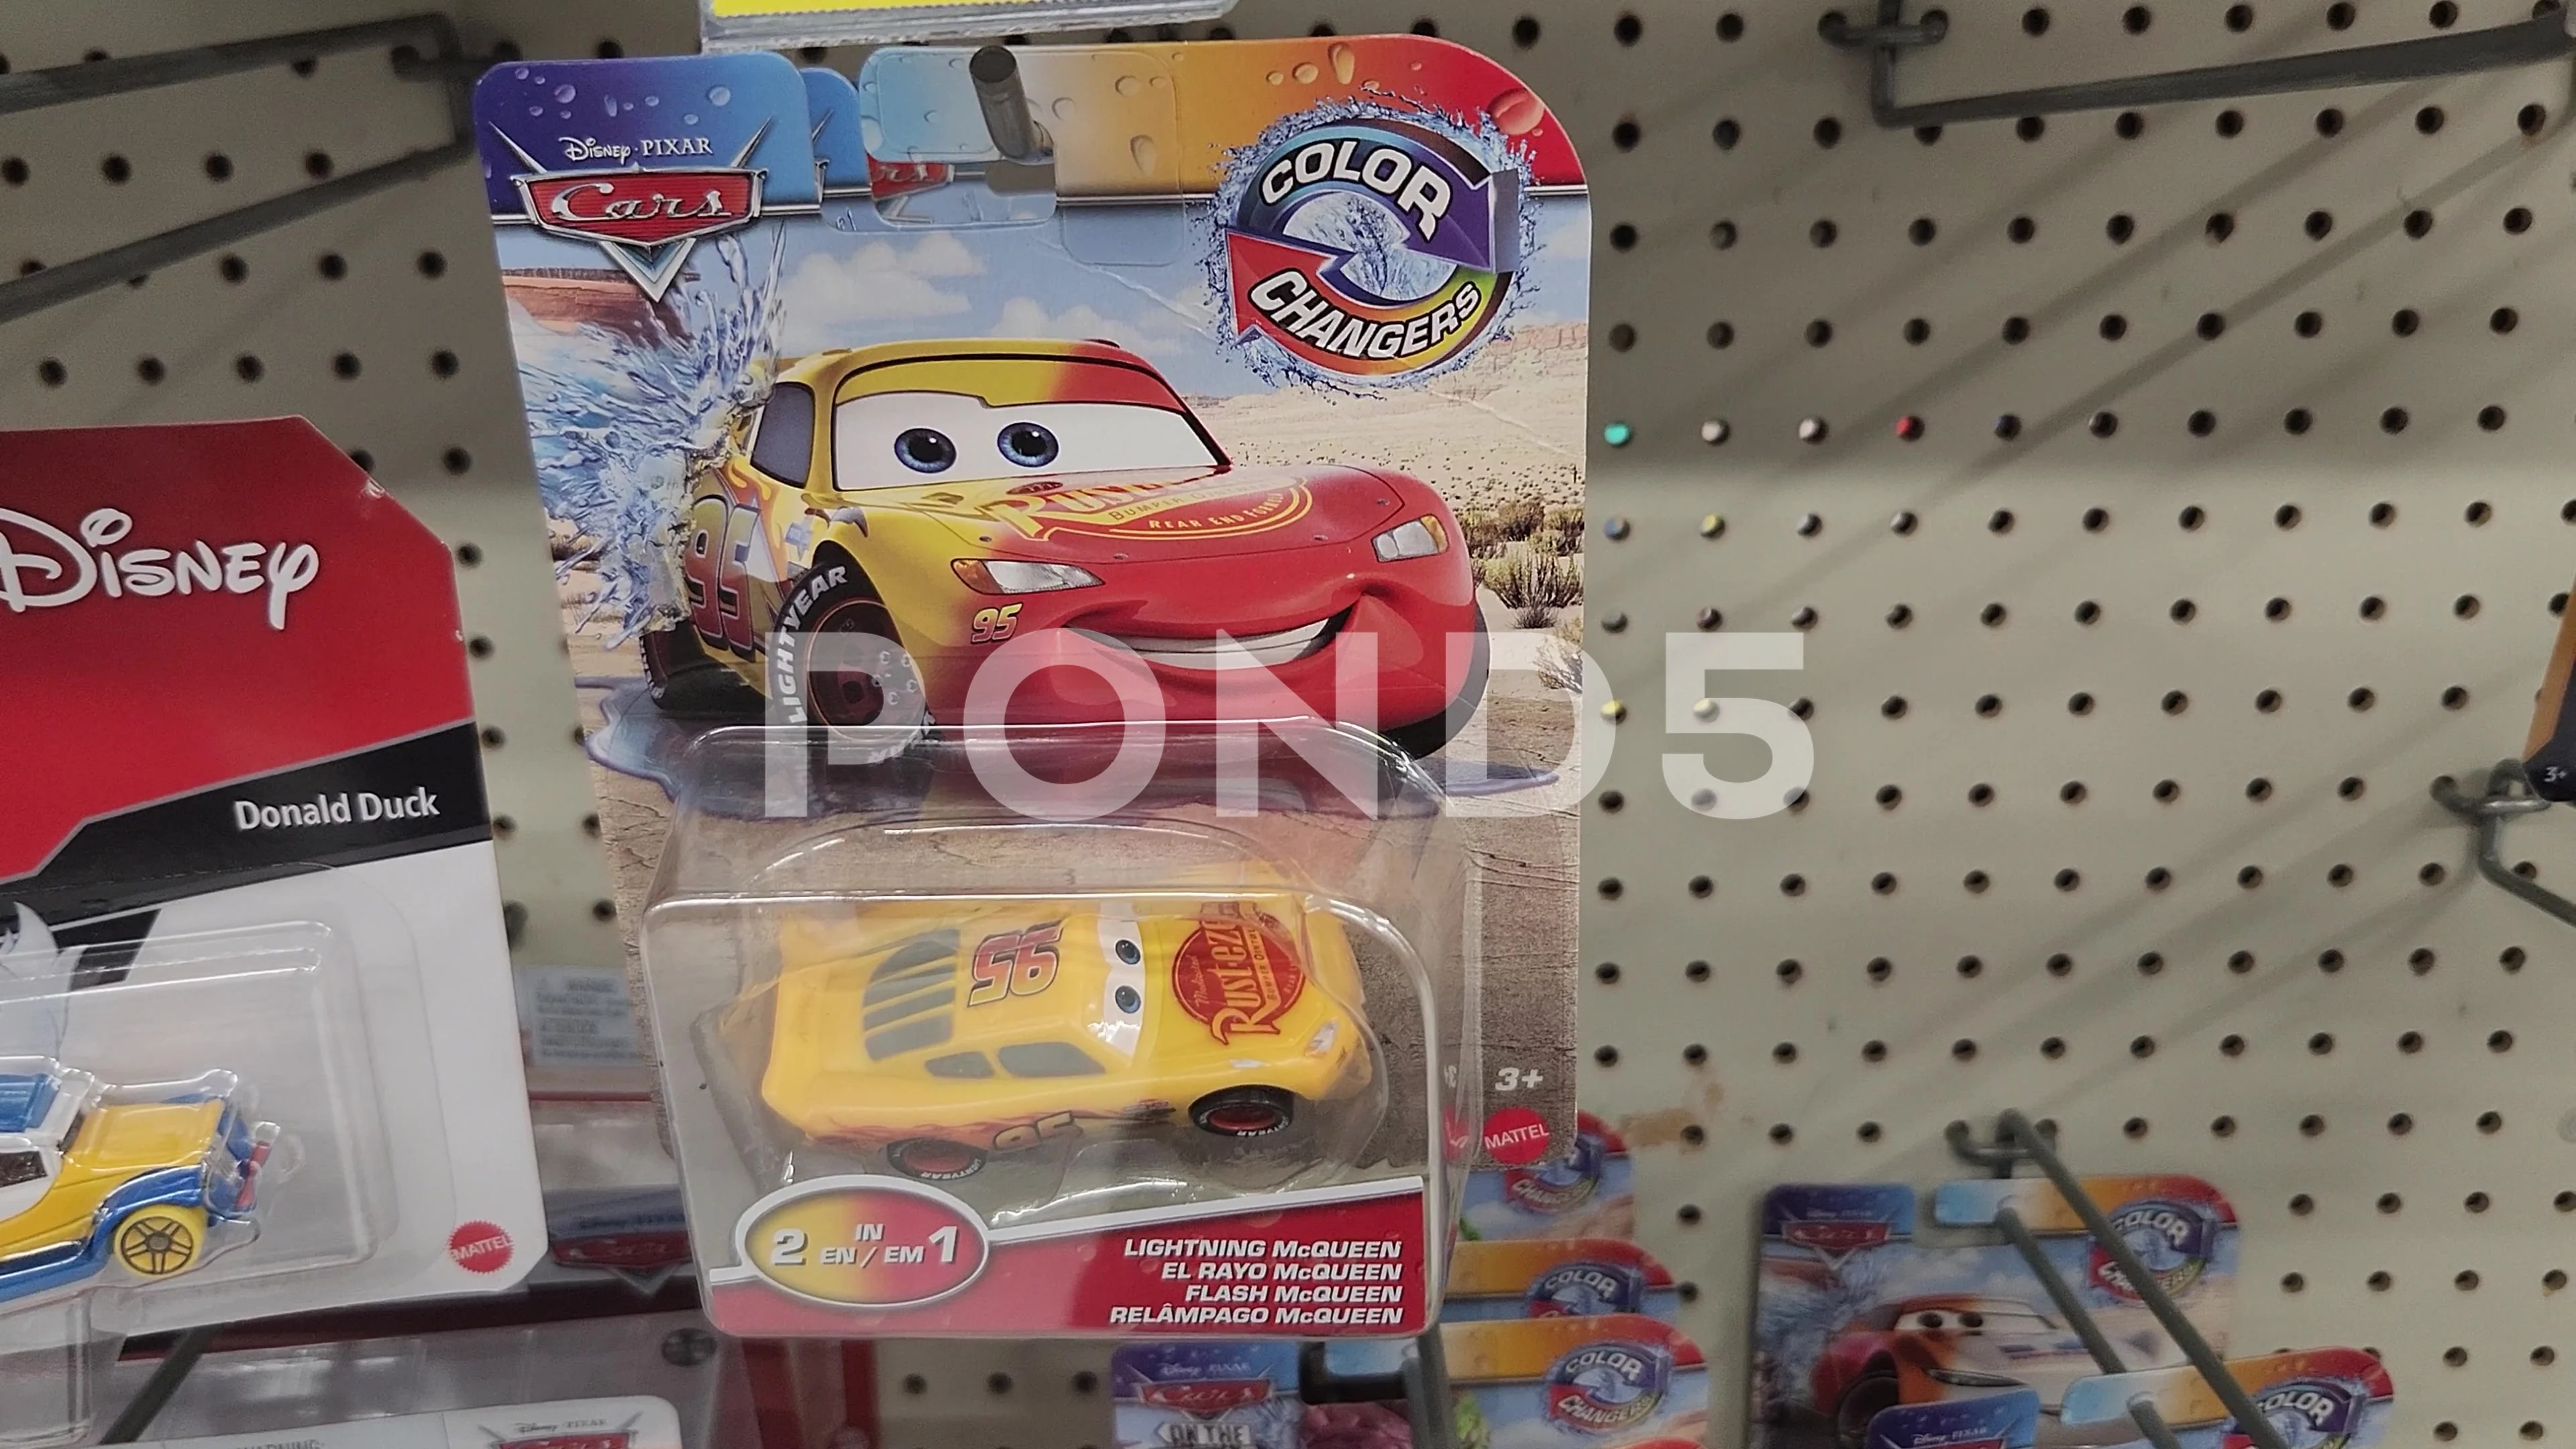 https://images.pond5.com/disney-pixar-cars-retailer-merchandise-242525482_prevstill.jpeg